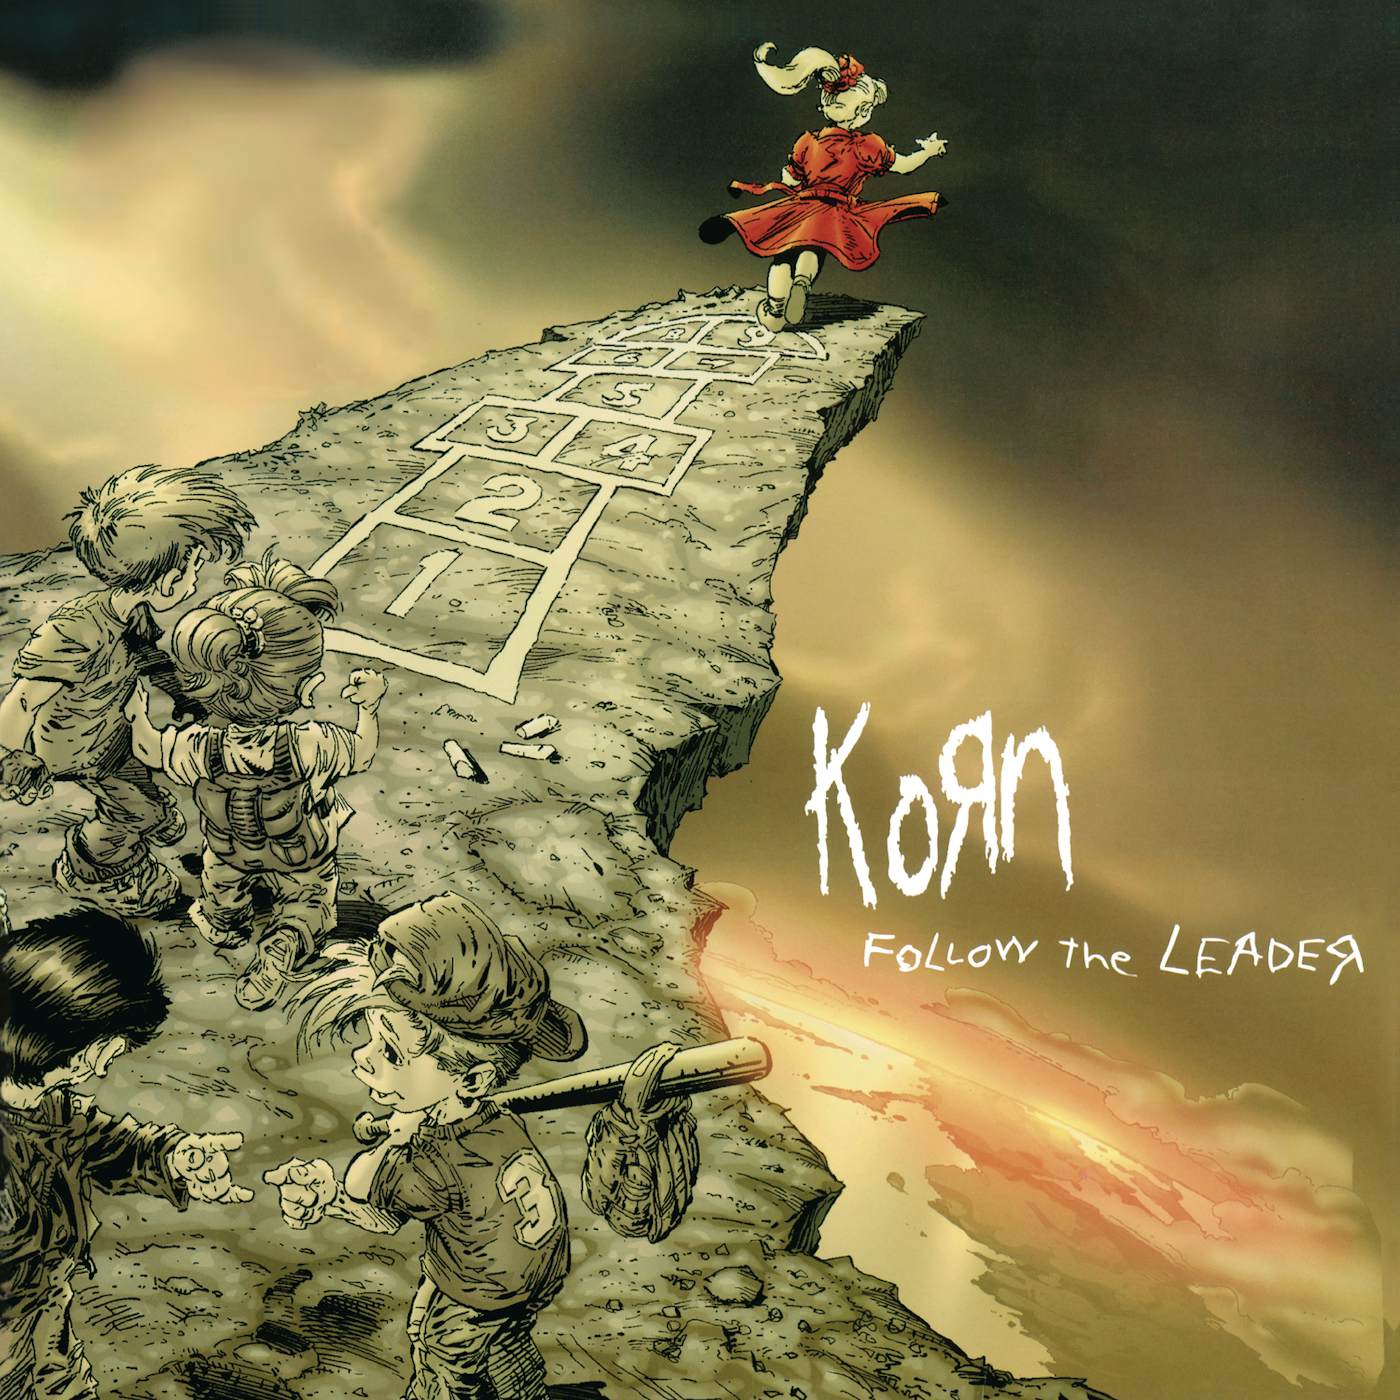 Korn FOLLOW THE LEADER CD